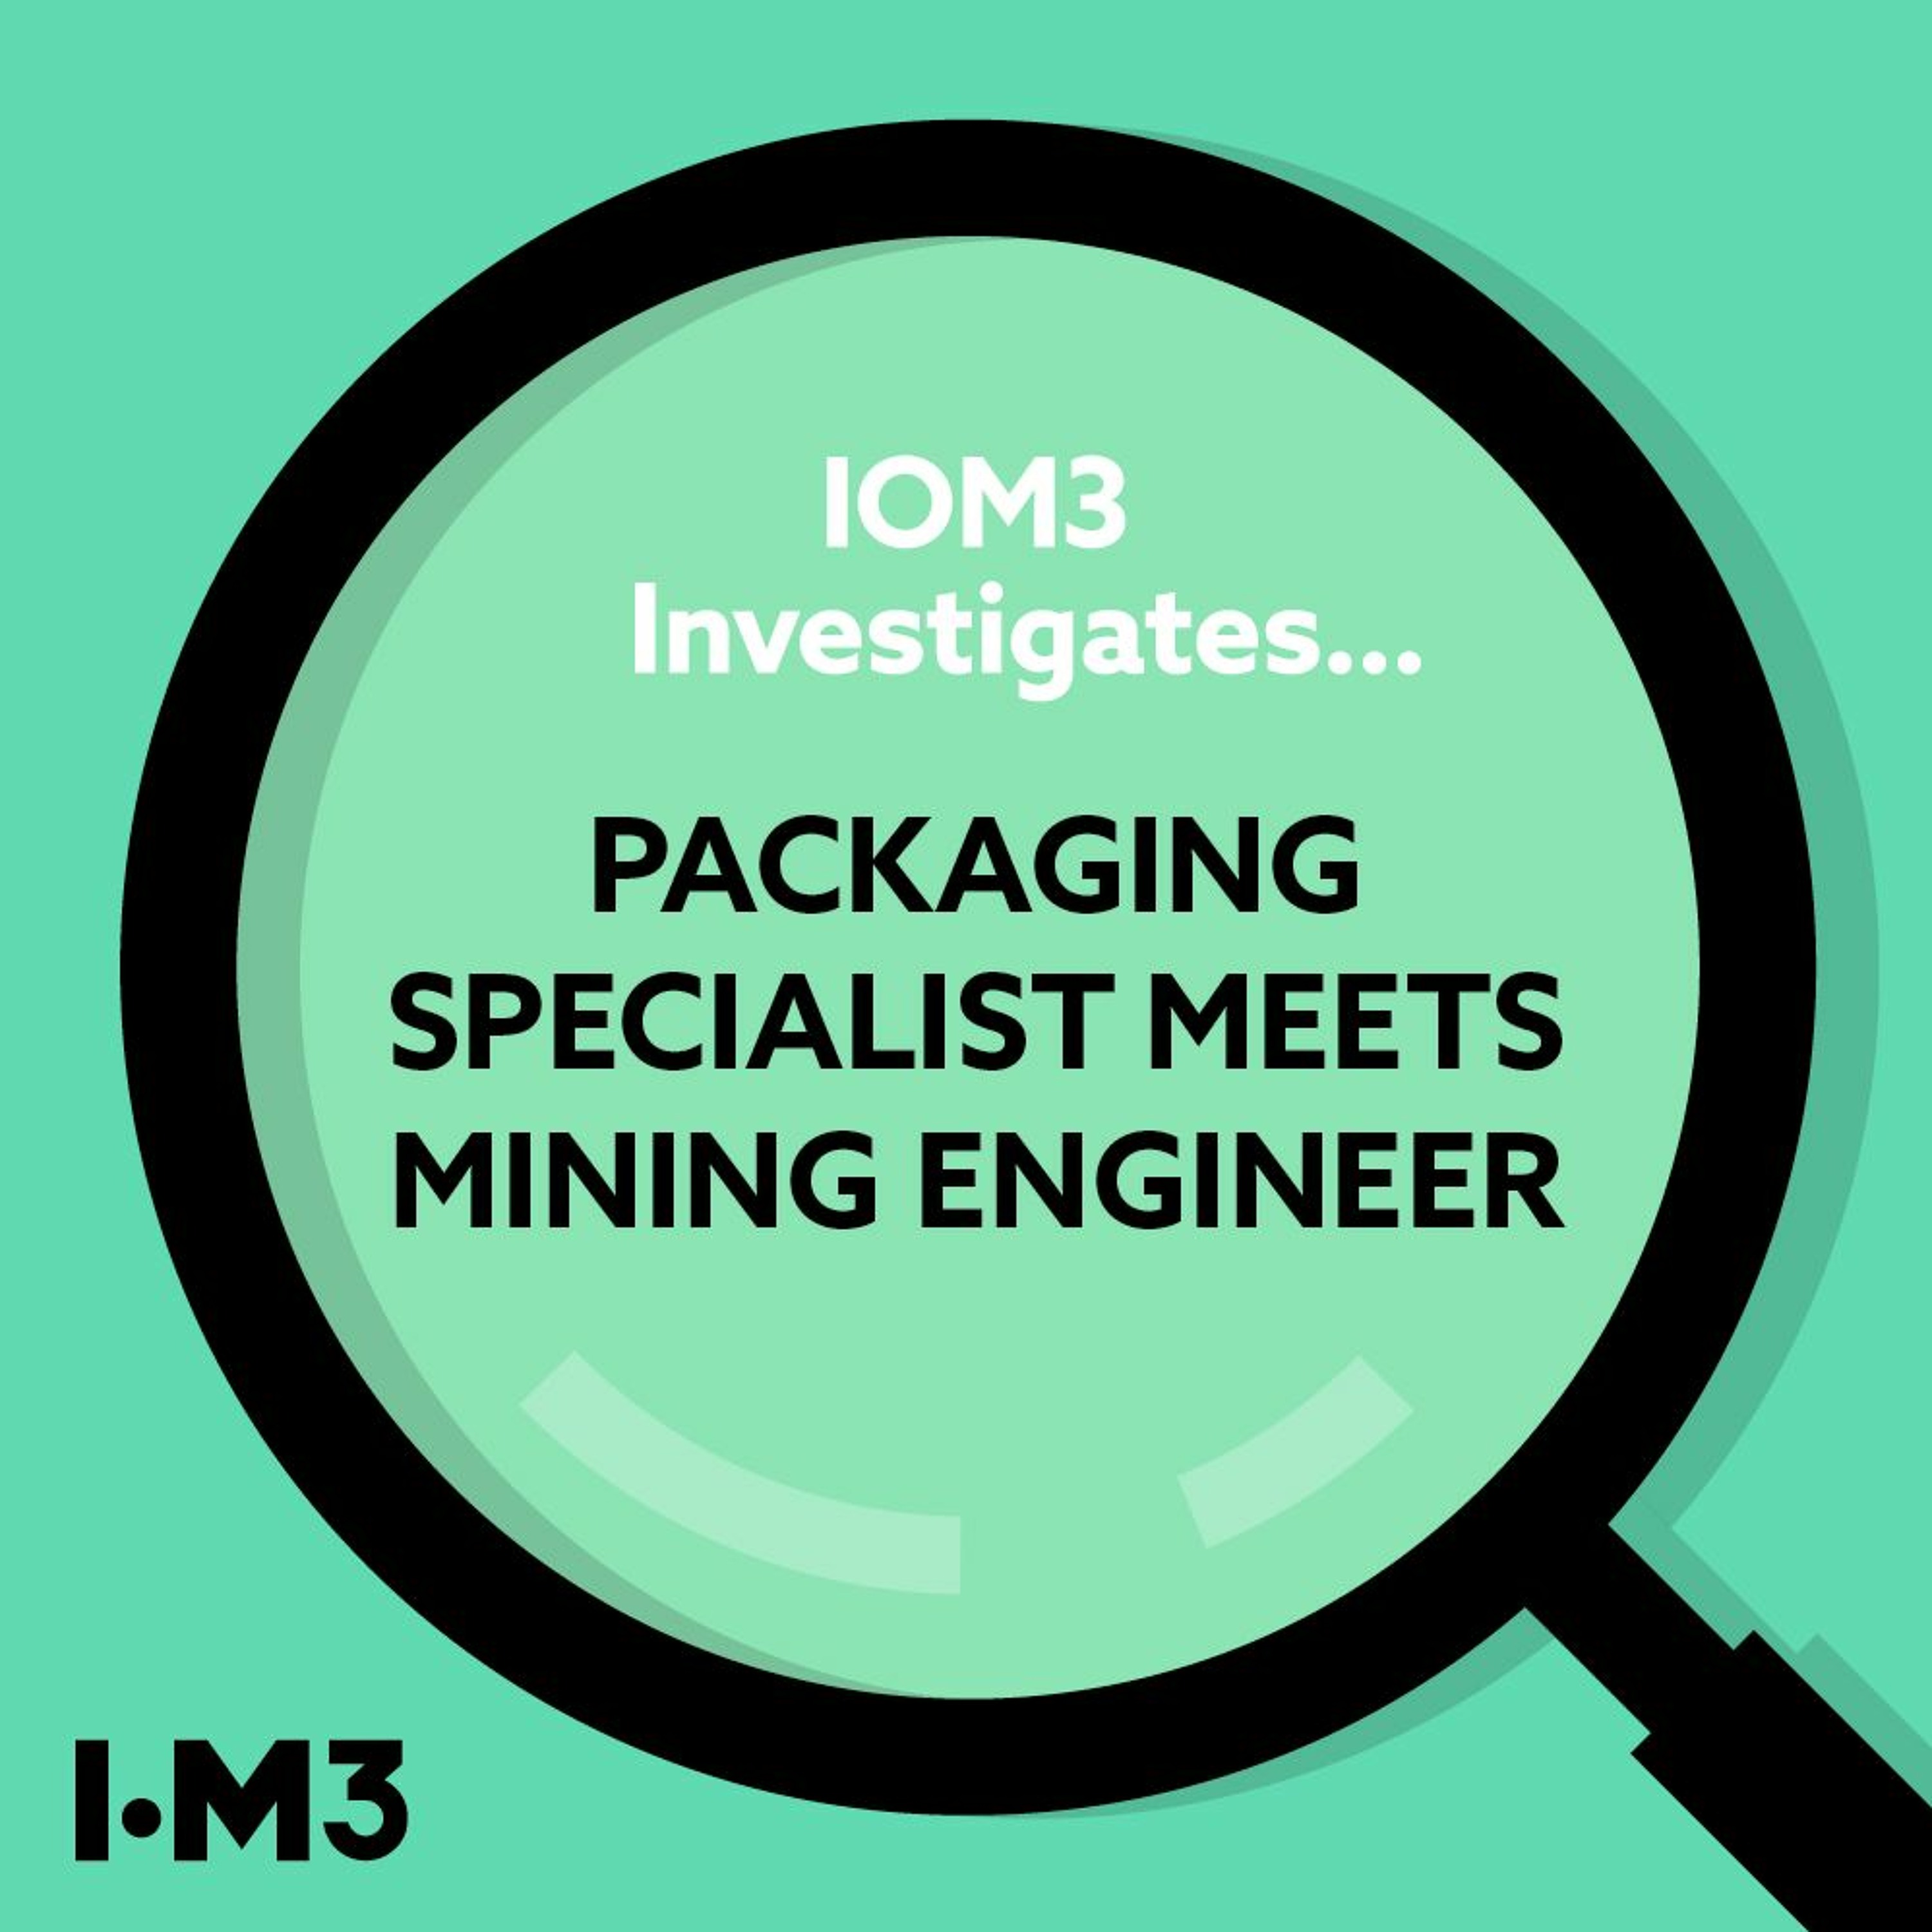 IOM3 Investigates... Packaging specialist meets mining engineer